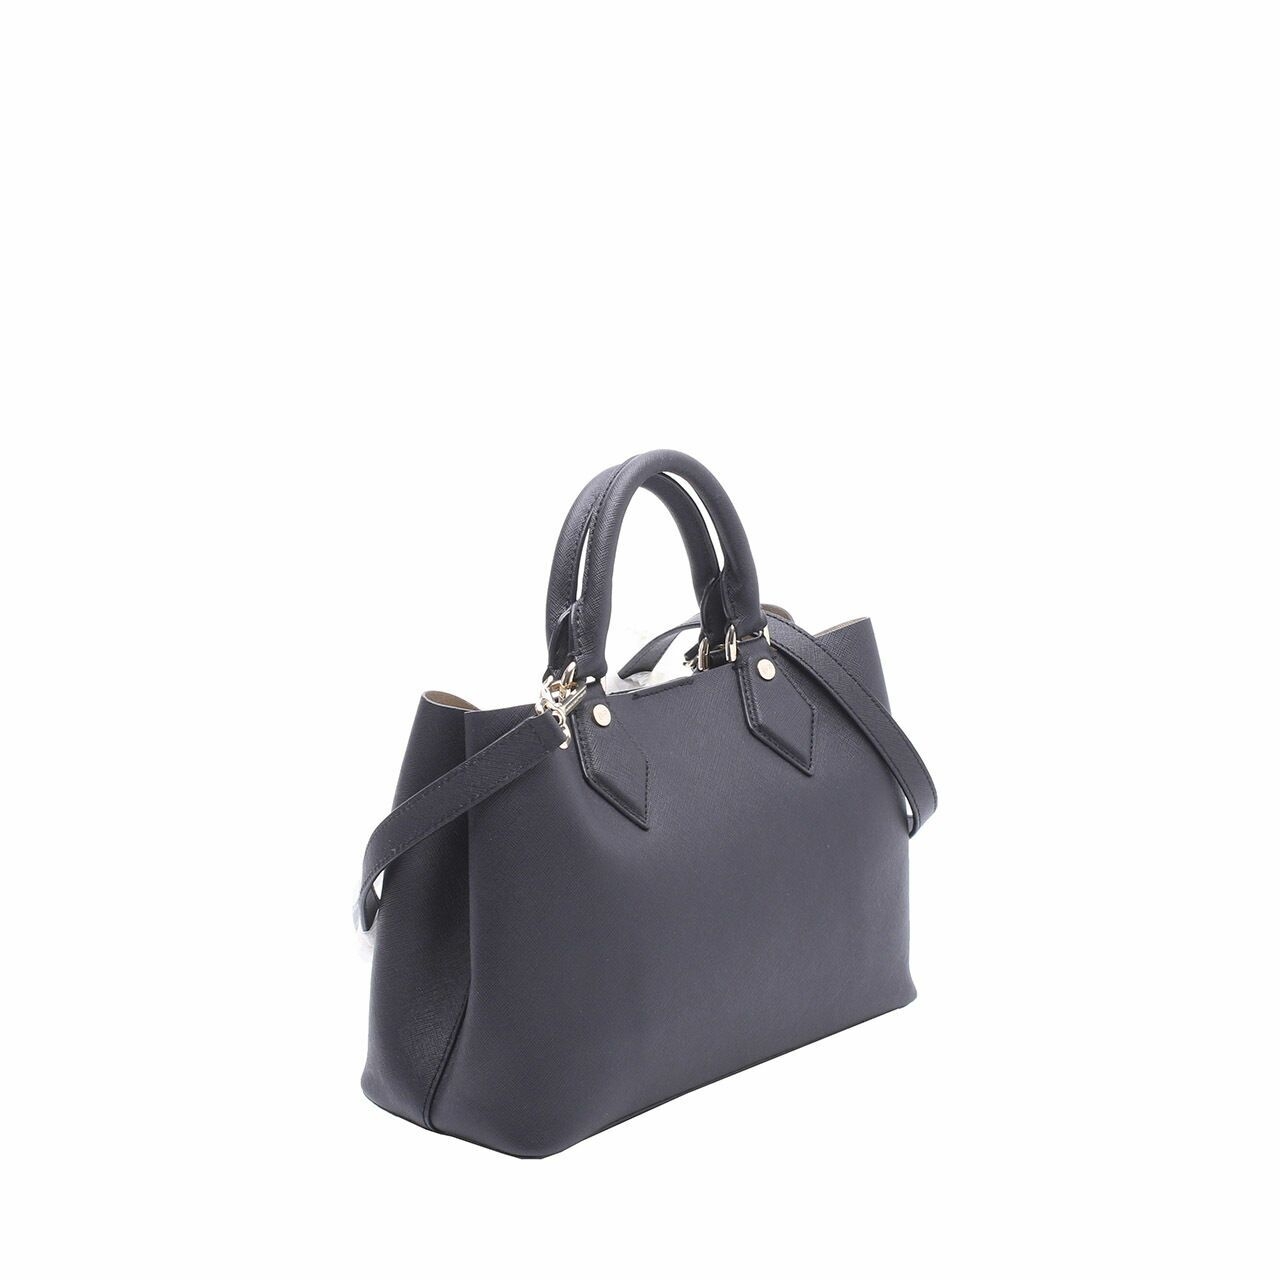 Diane von Furstenberg Women's Voyage on-the-Go Small Leather Carryall Black Satchel Bag